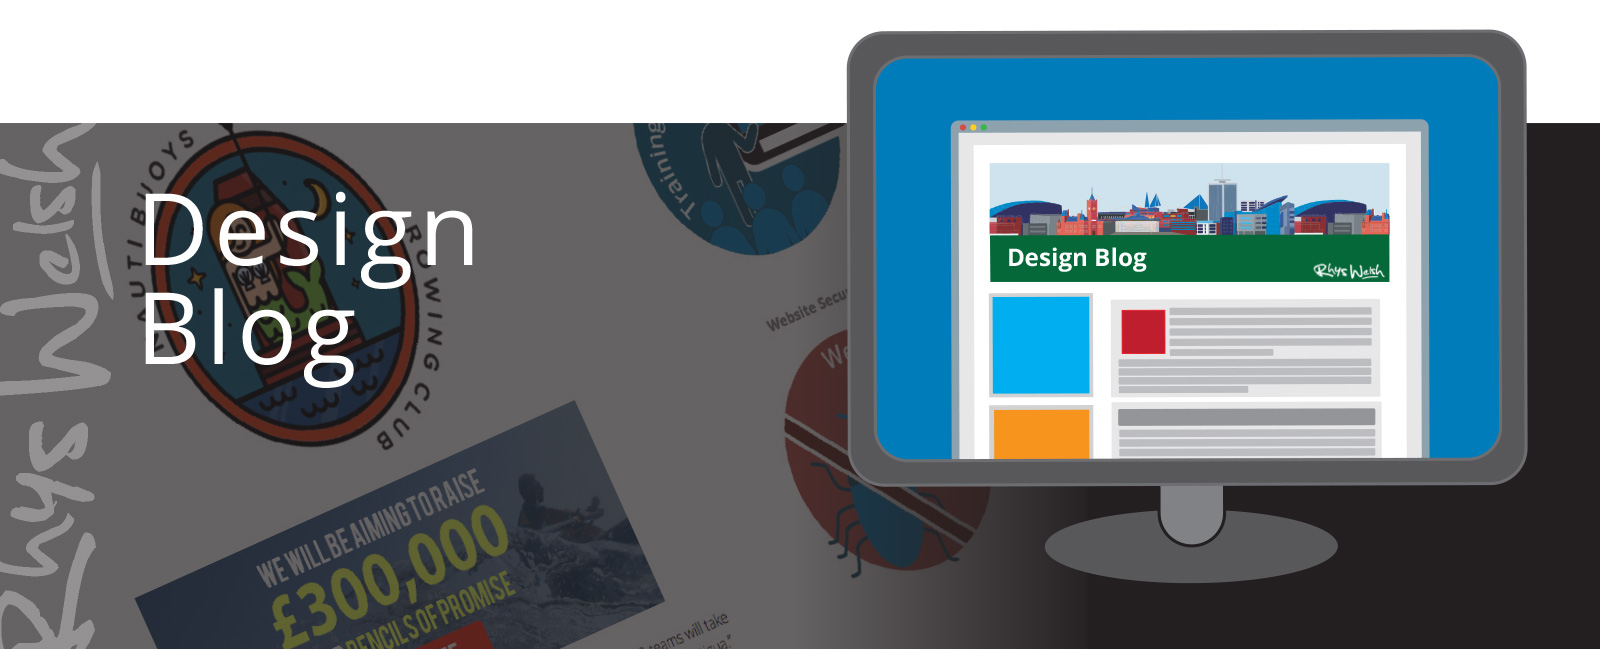 Design Blog Web Design for cardiff